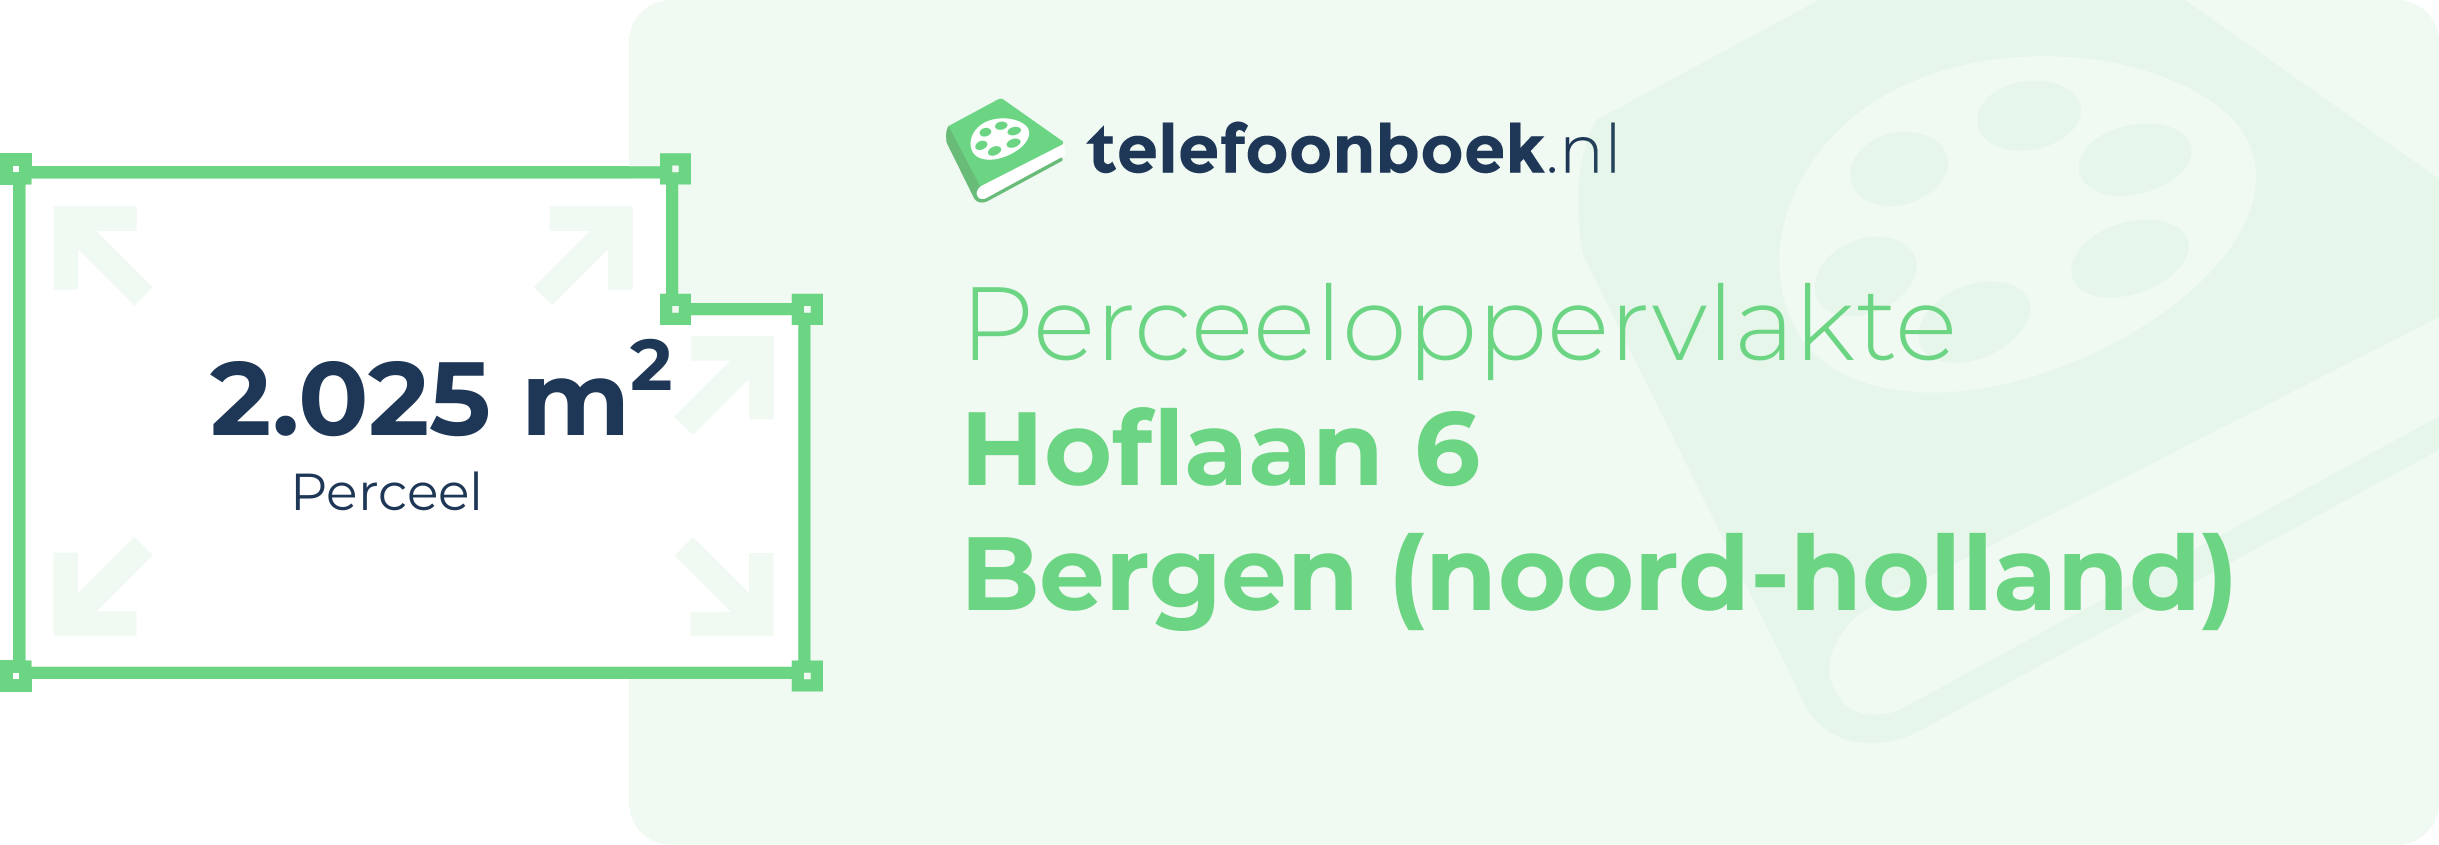 Perceeloppervlakte Hoflaan 6 Bergen (Noord-Holland)